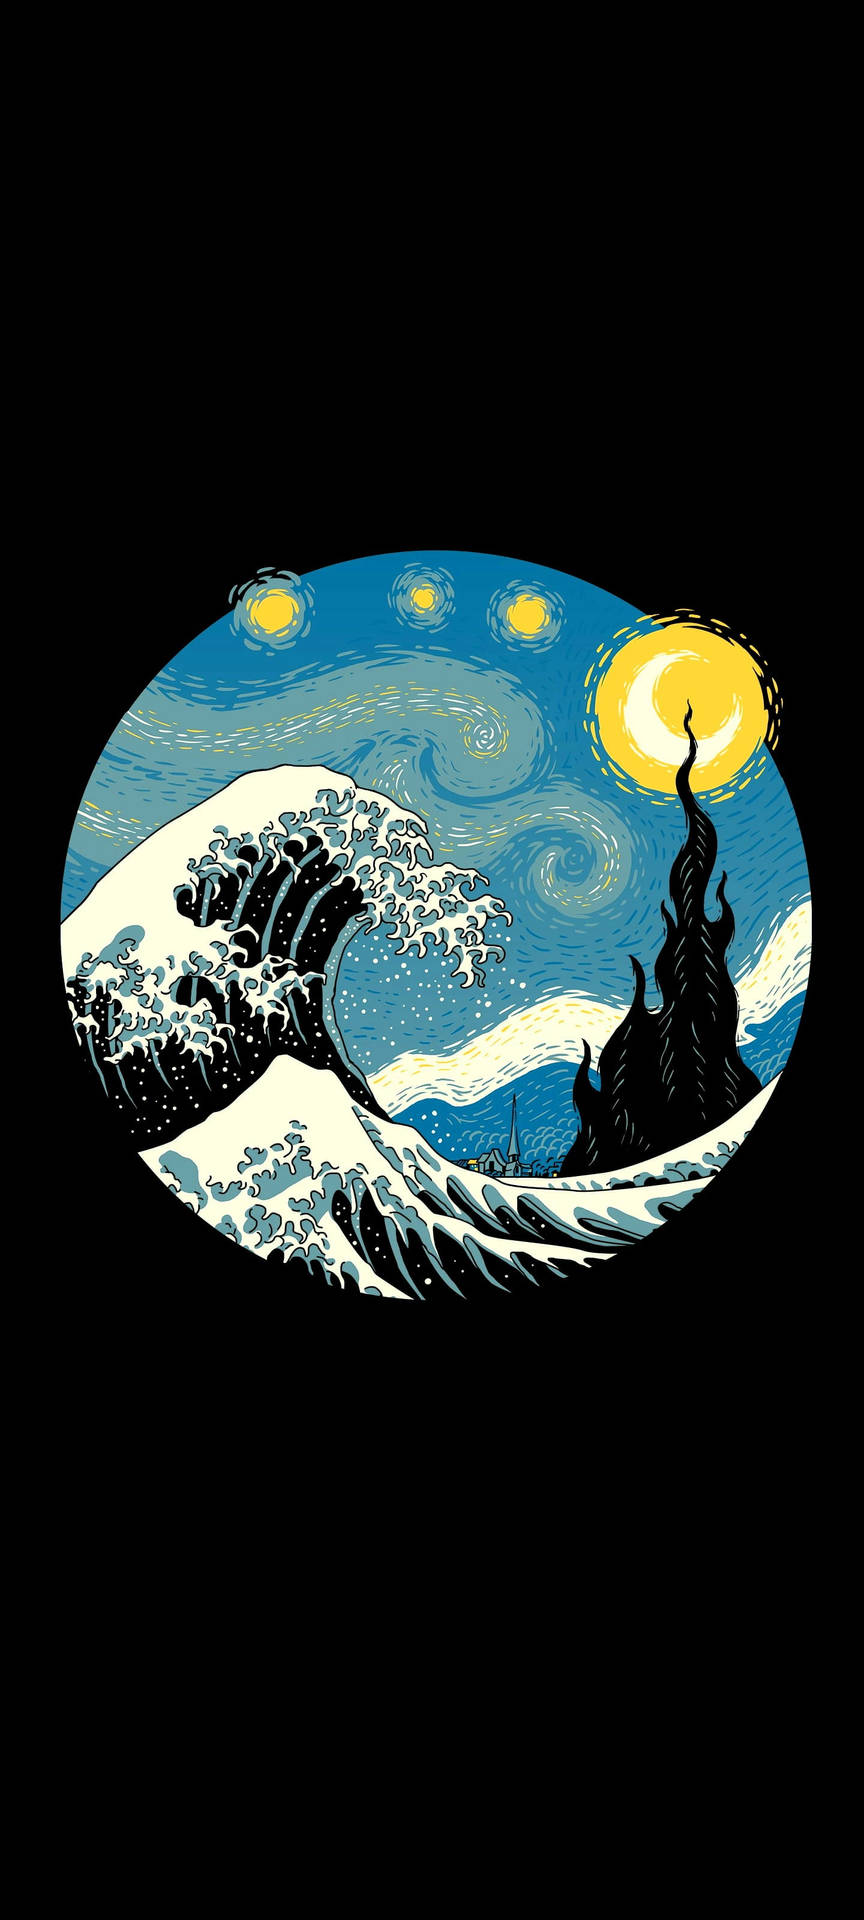 Underbarahokusai Van Starry Night. Wallpaper